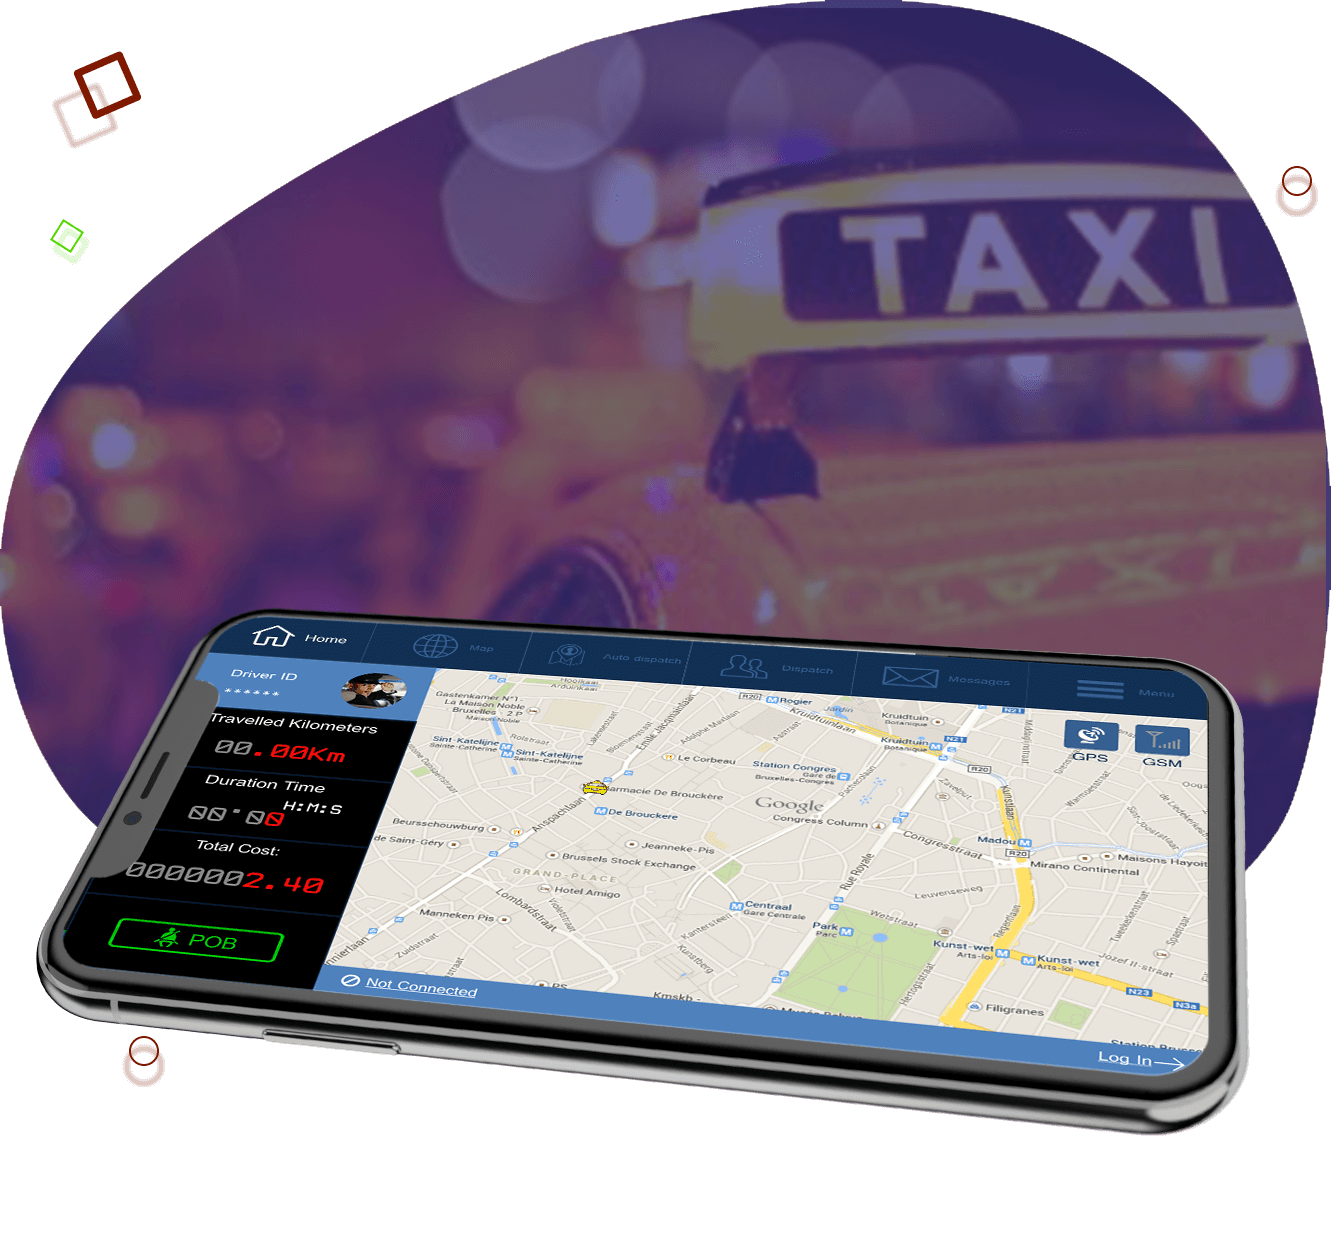 Cab Dispatch System